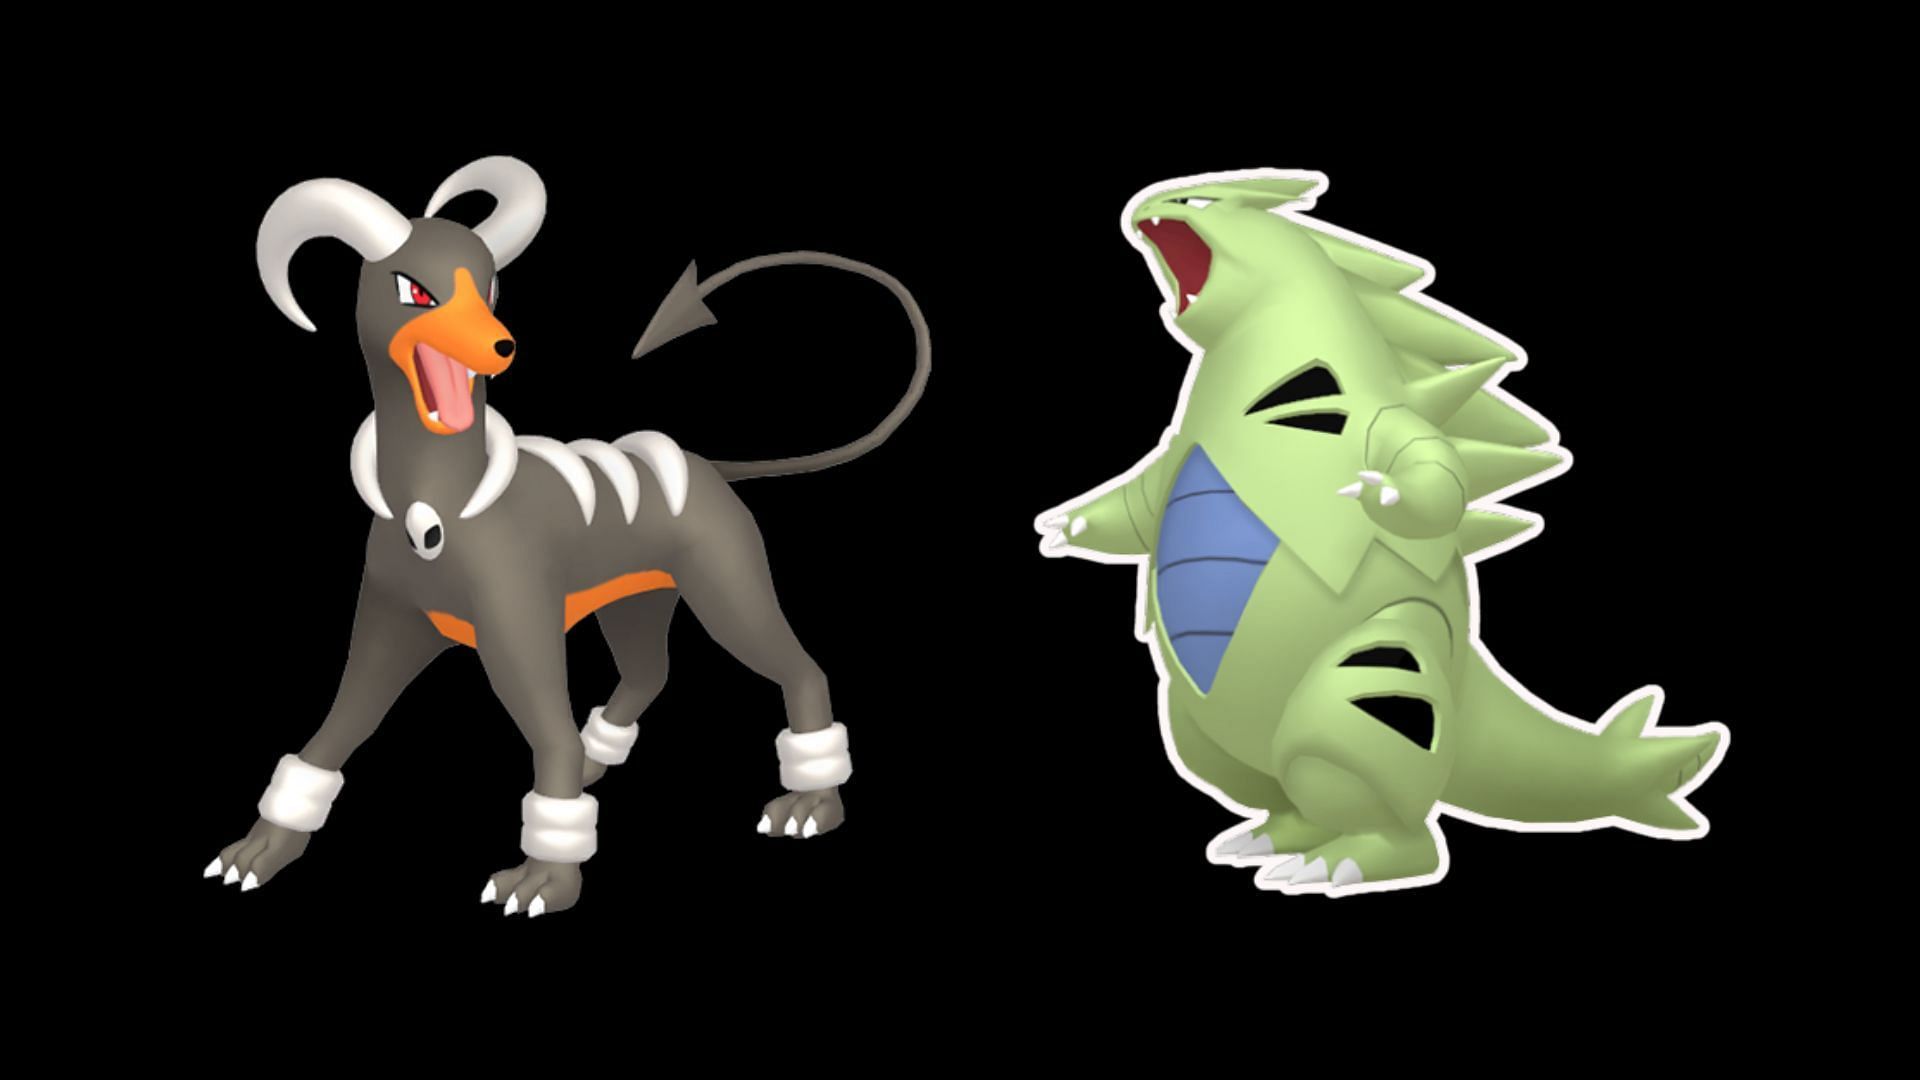 Dark-type Pokemon designs with Houndoom and Tyranitar